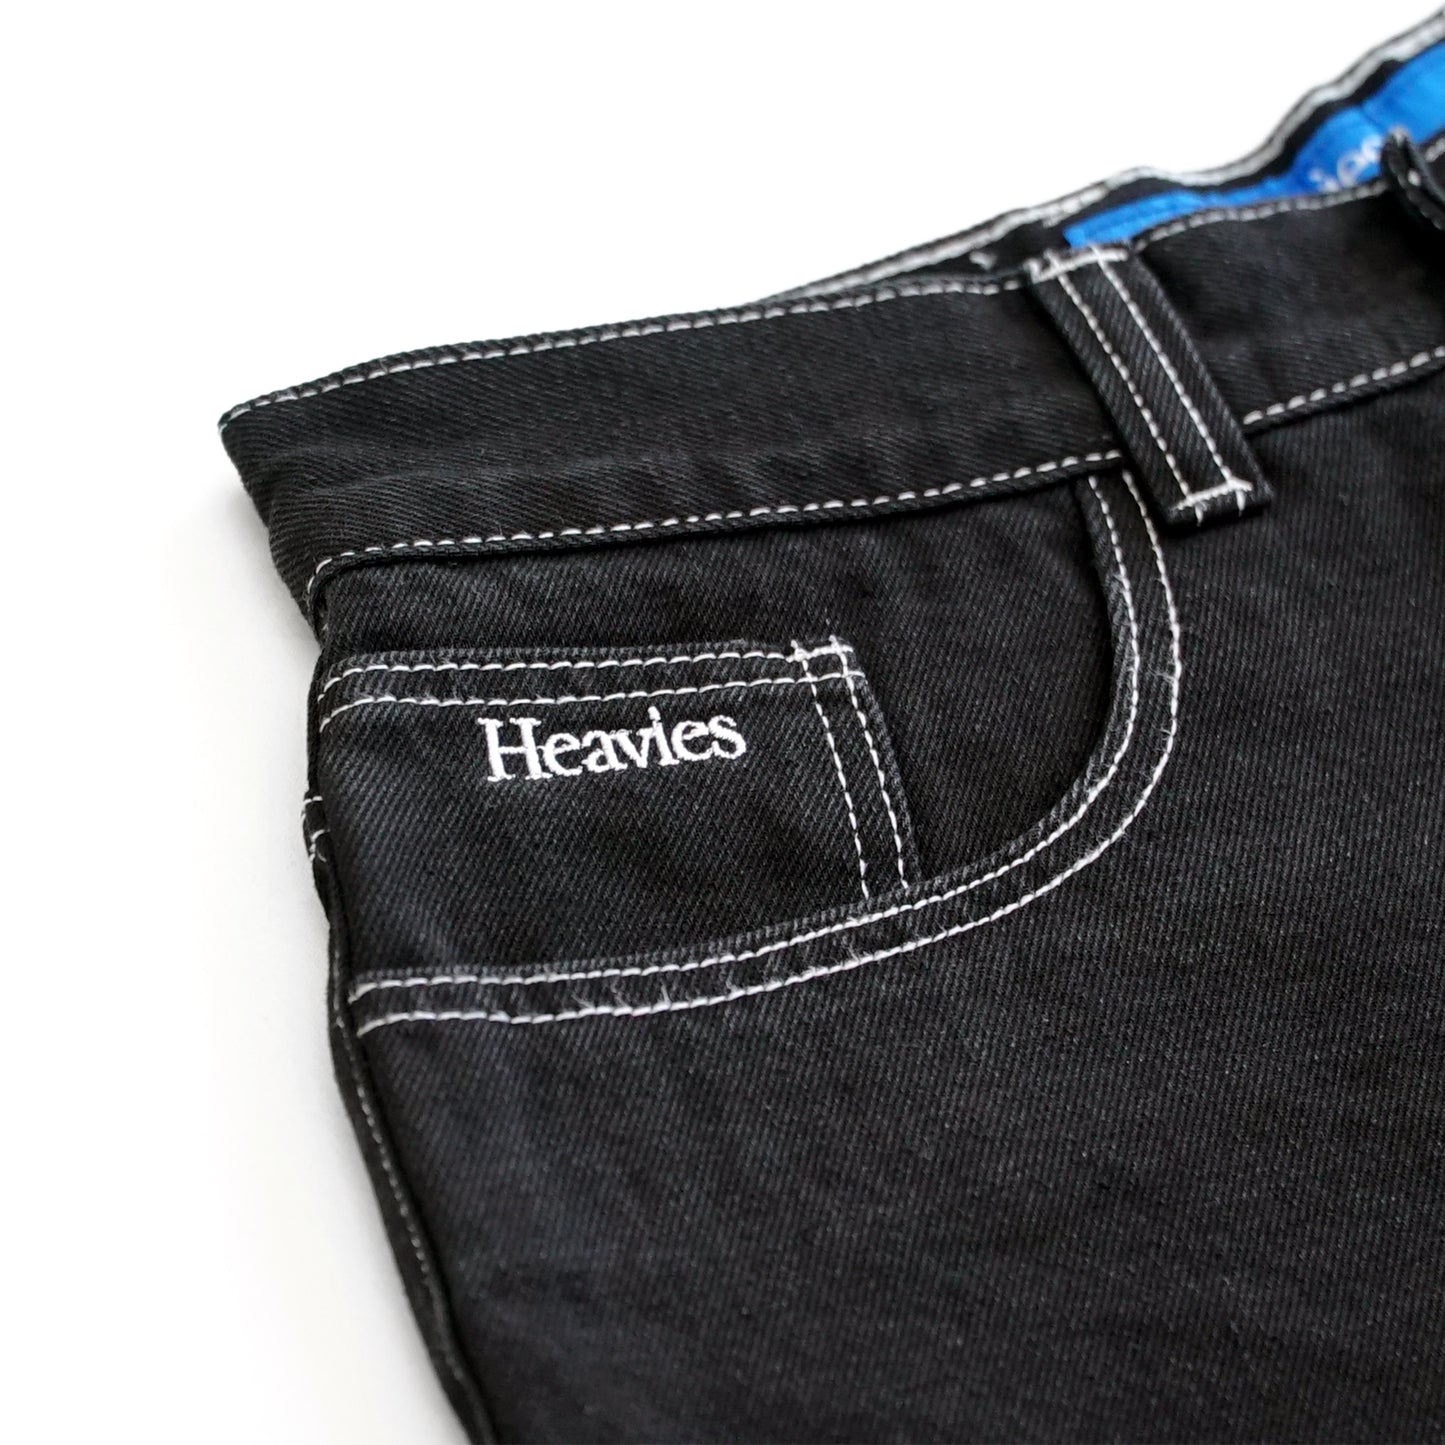 HEAVIES - 01 Jeans/Black